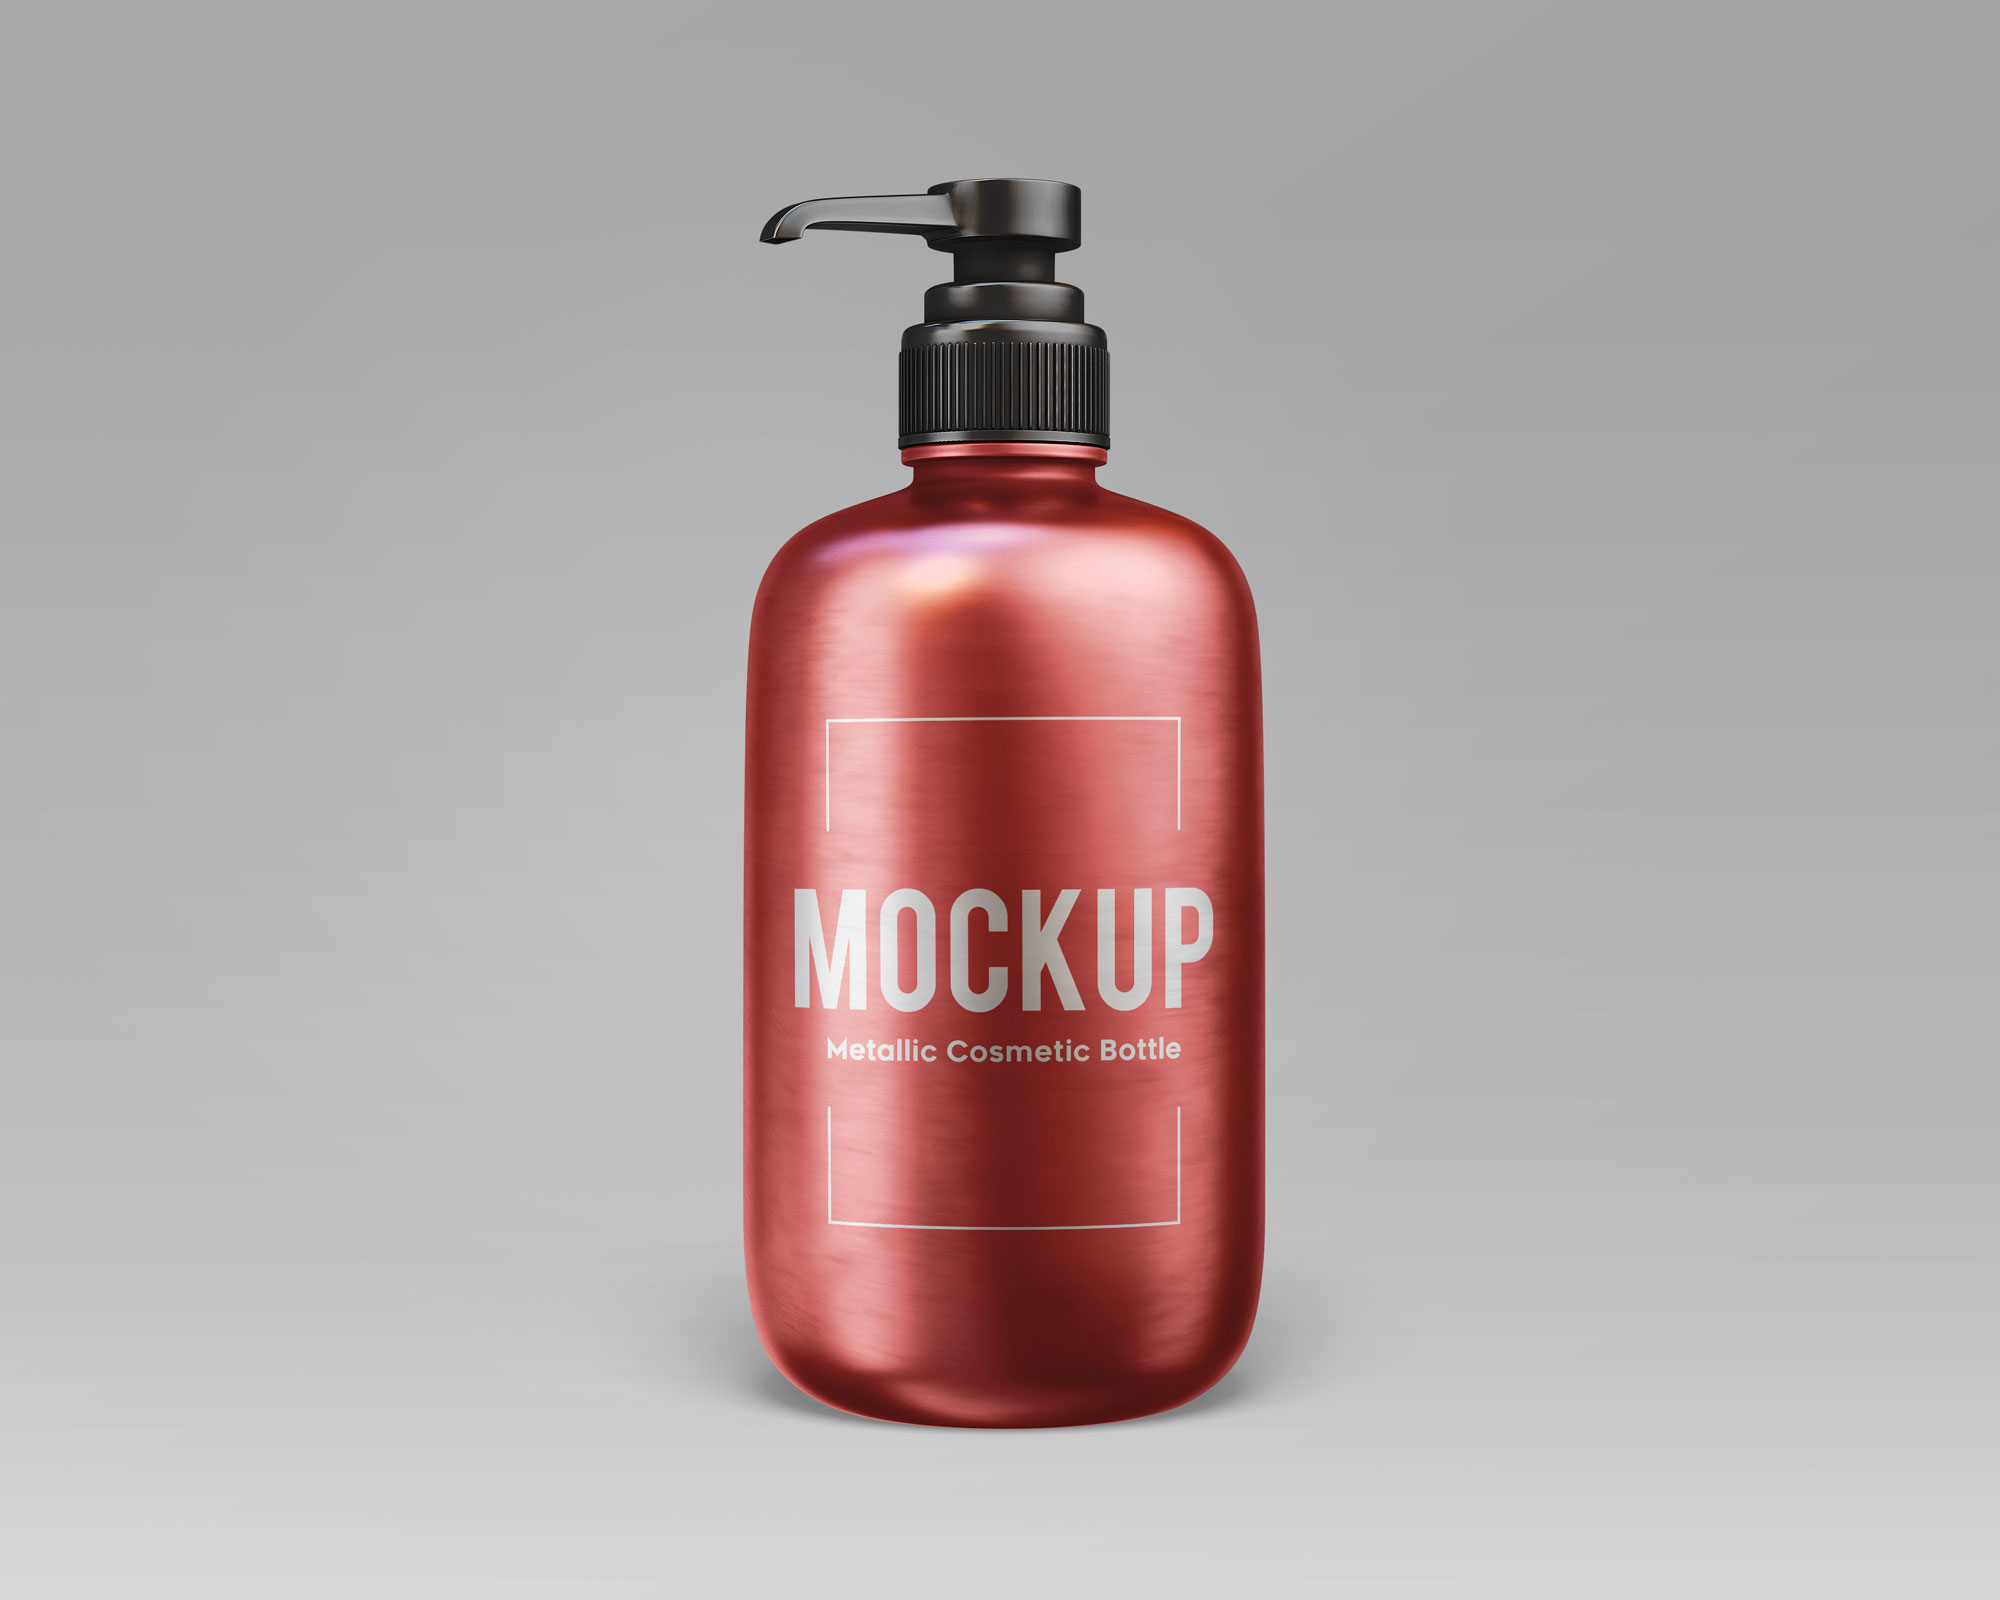 Free Pump Dispenser Cosmetics Bottle Mockup (PSD)